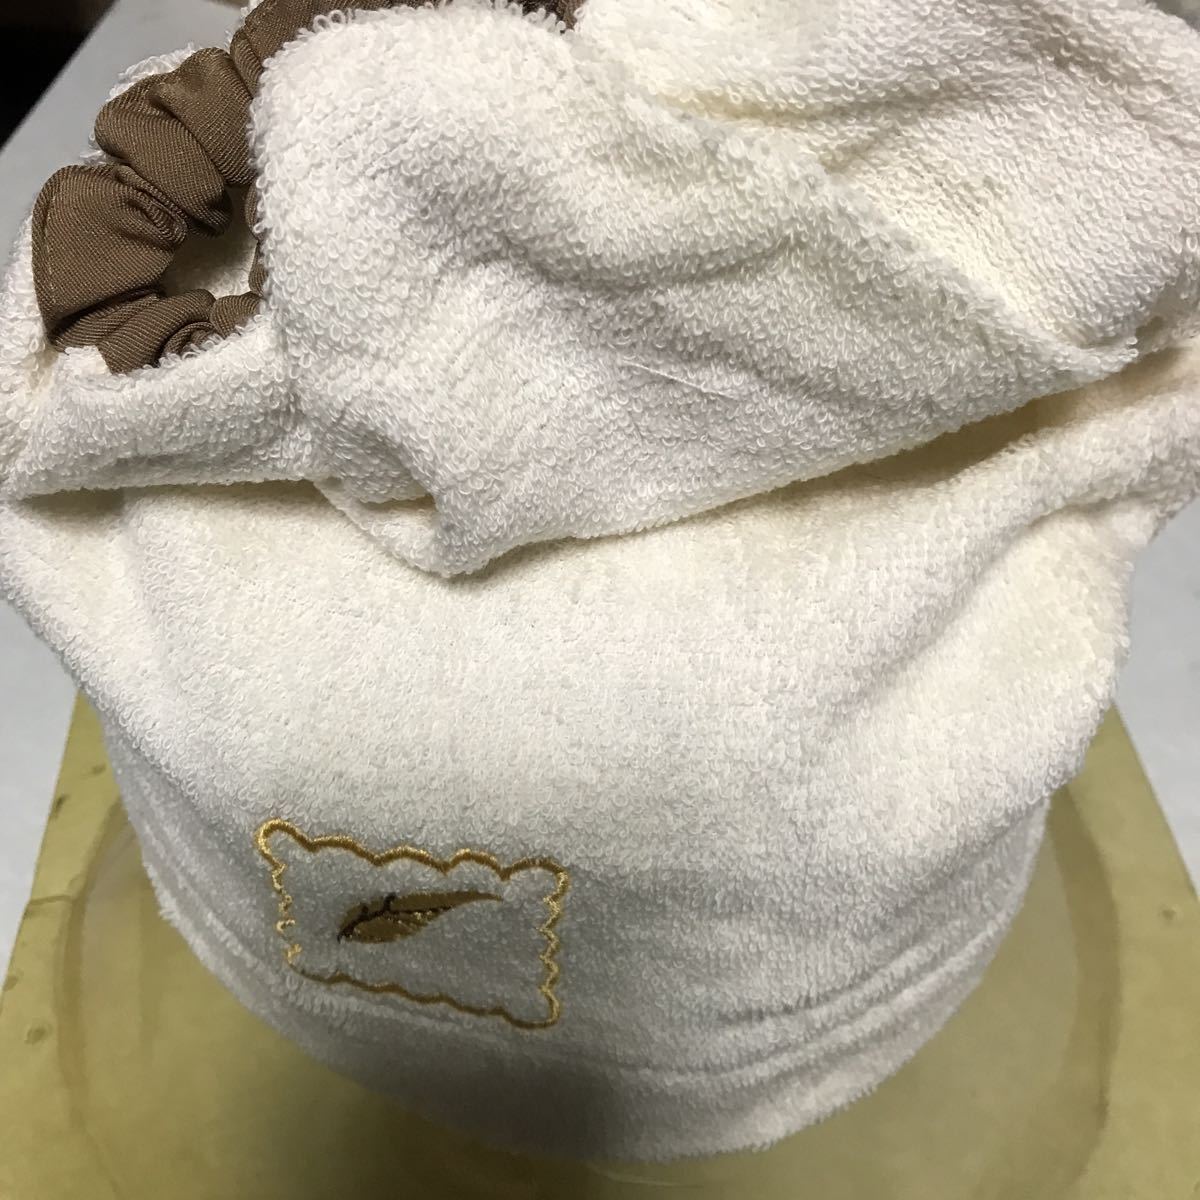 ( free shipping ) dry cap ... hat towel bath tool pool tool ... towel 